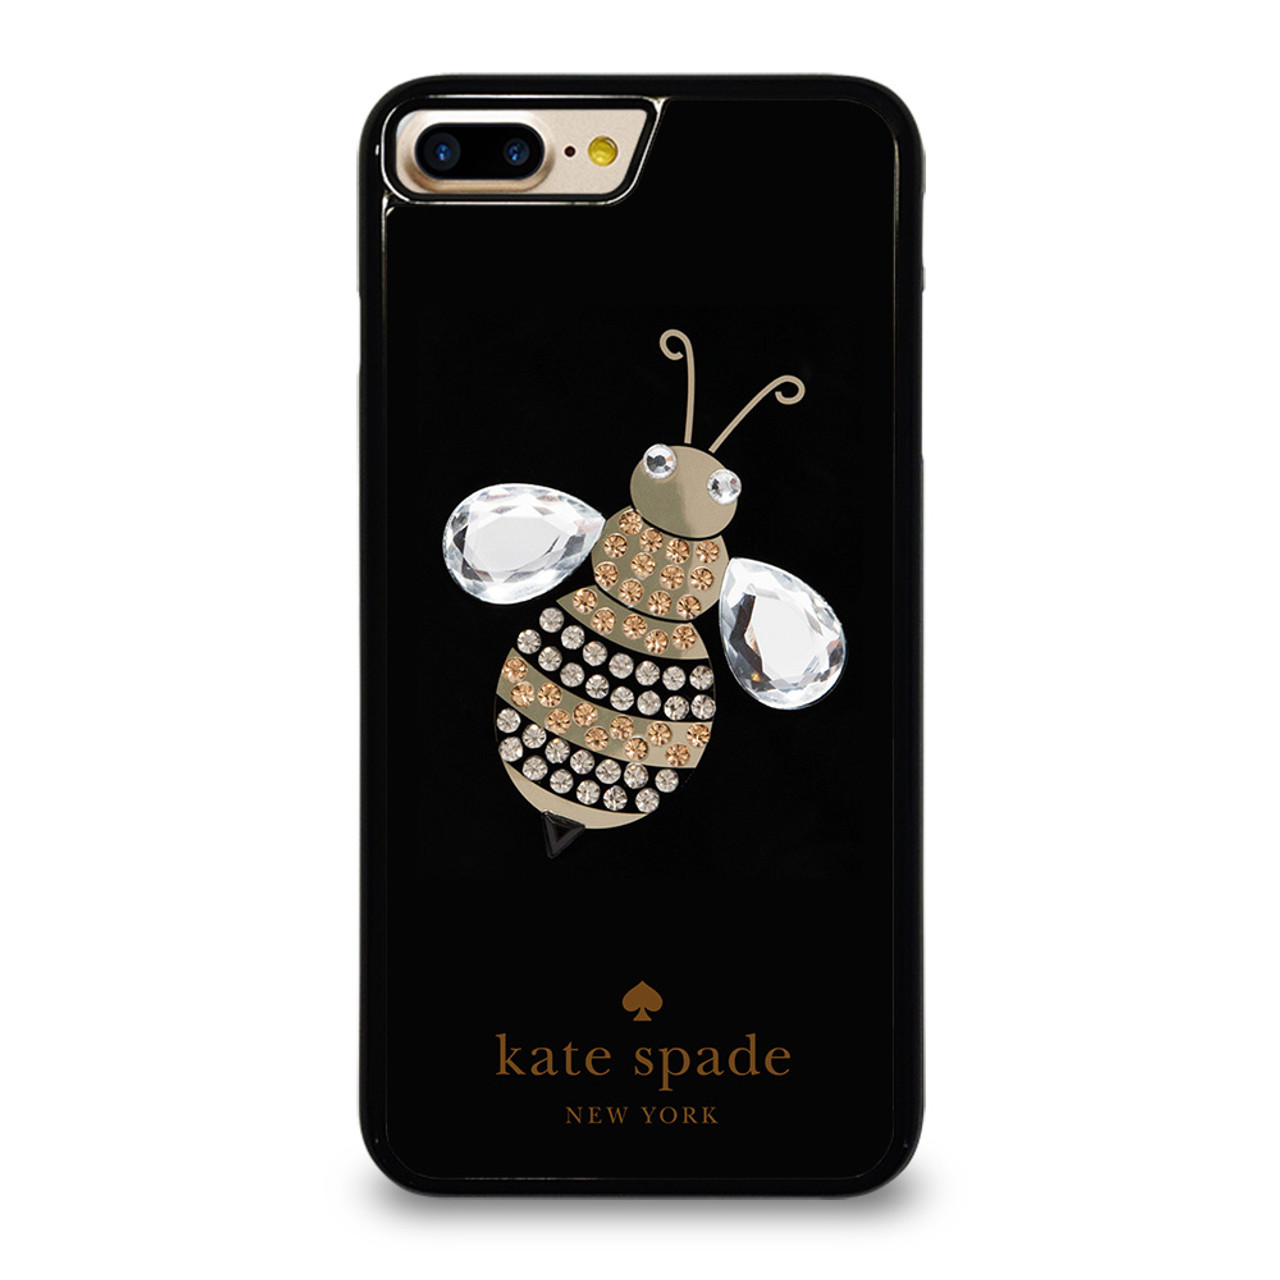 KATE SPADE DIAMOND BEE iPhone 7 / 8 Plus Case Cover